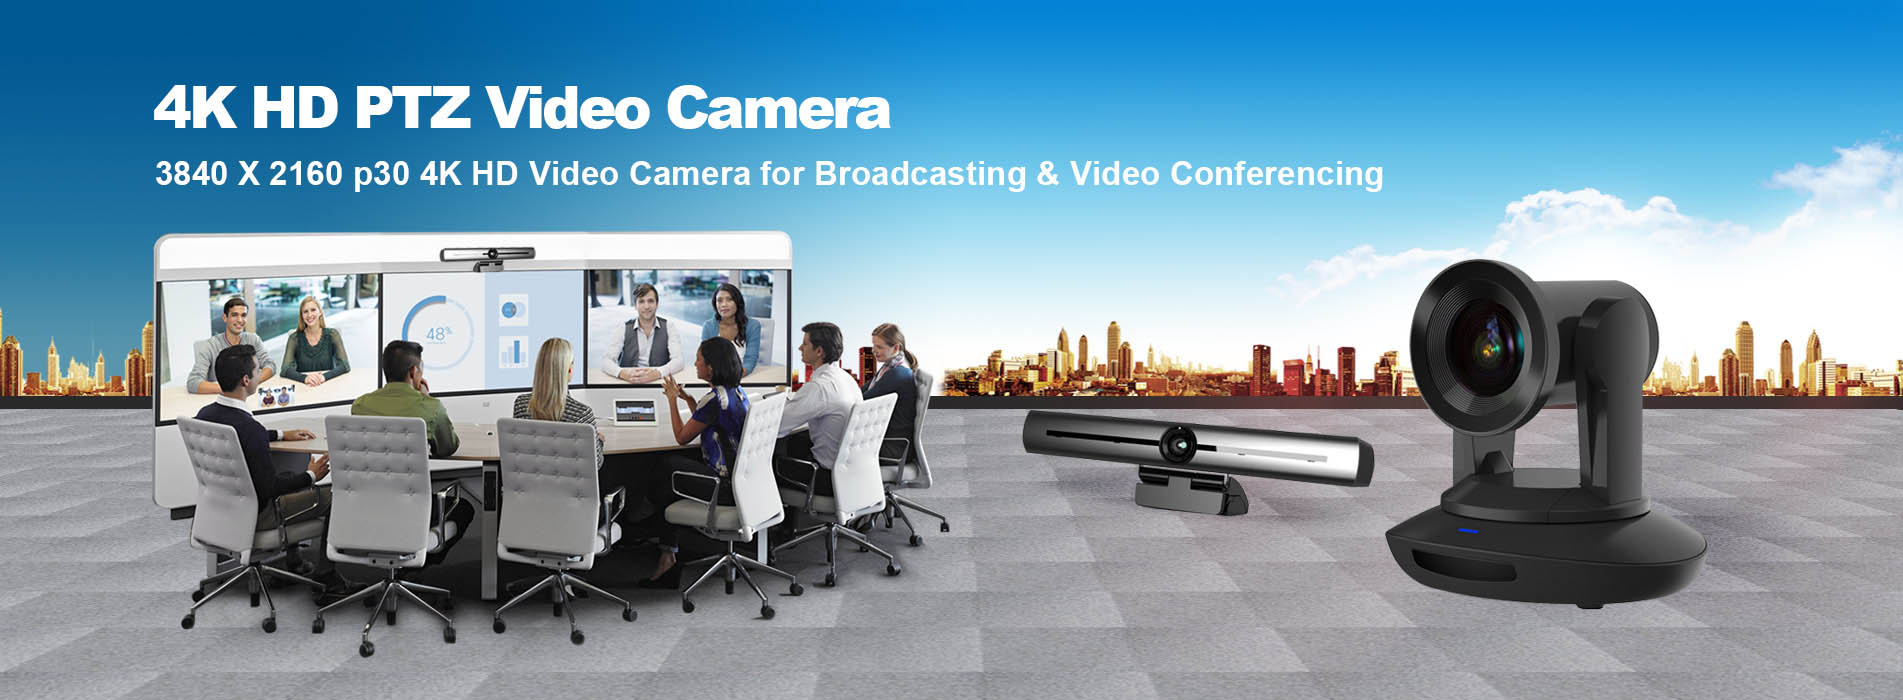 4K Video Conference Camera